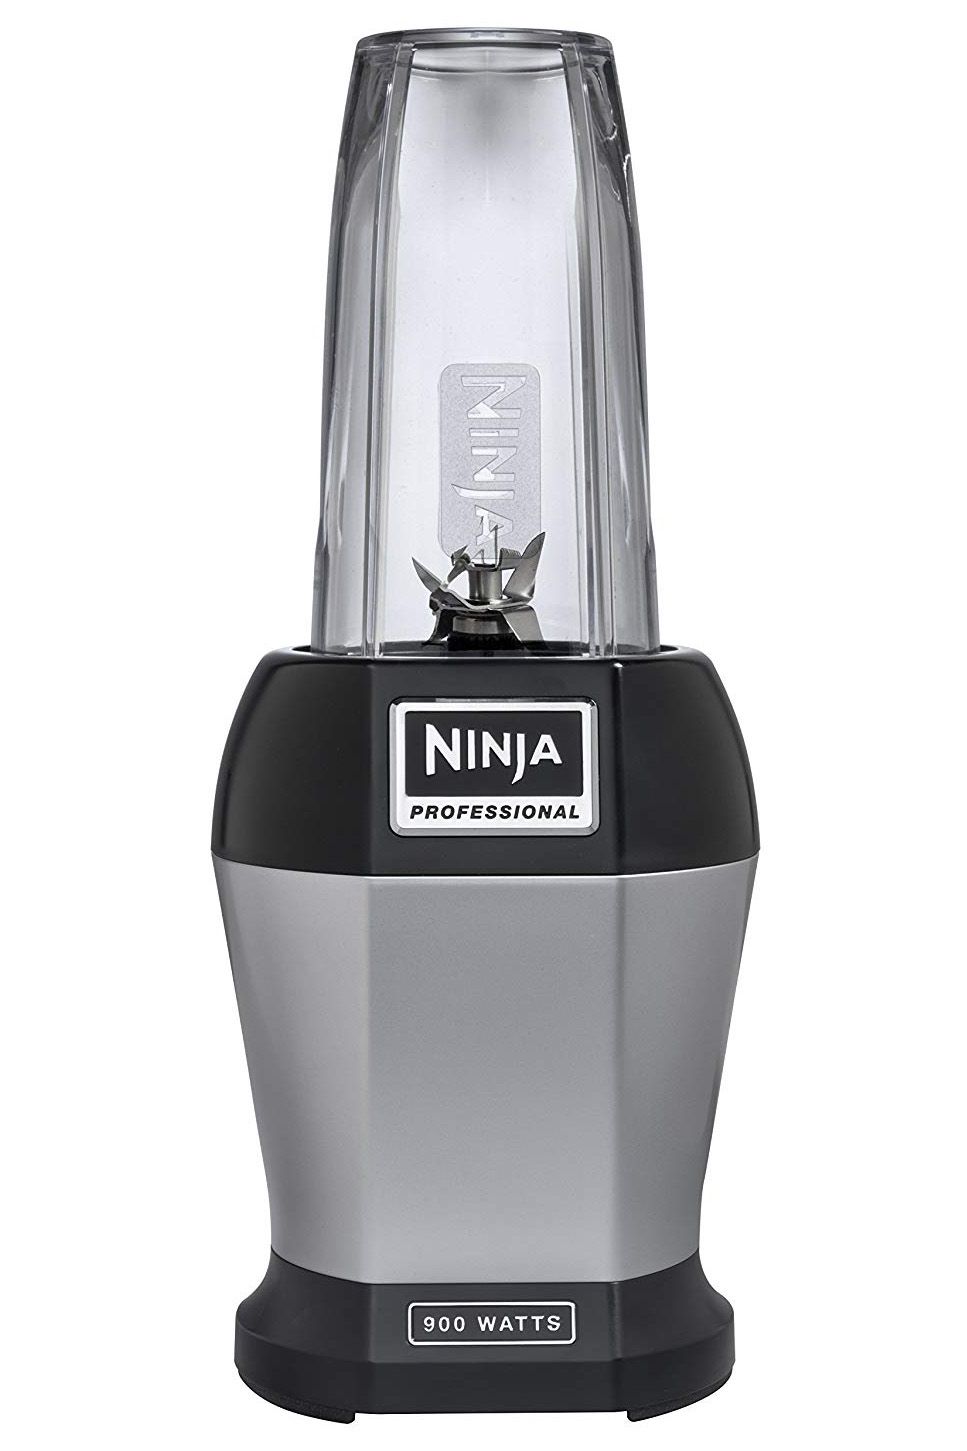 Ninja Professional Blender 900 Watts Parts Blender Molding Coffee